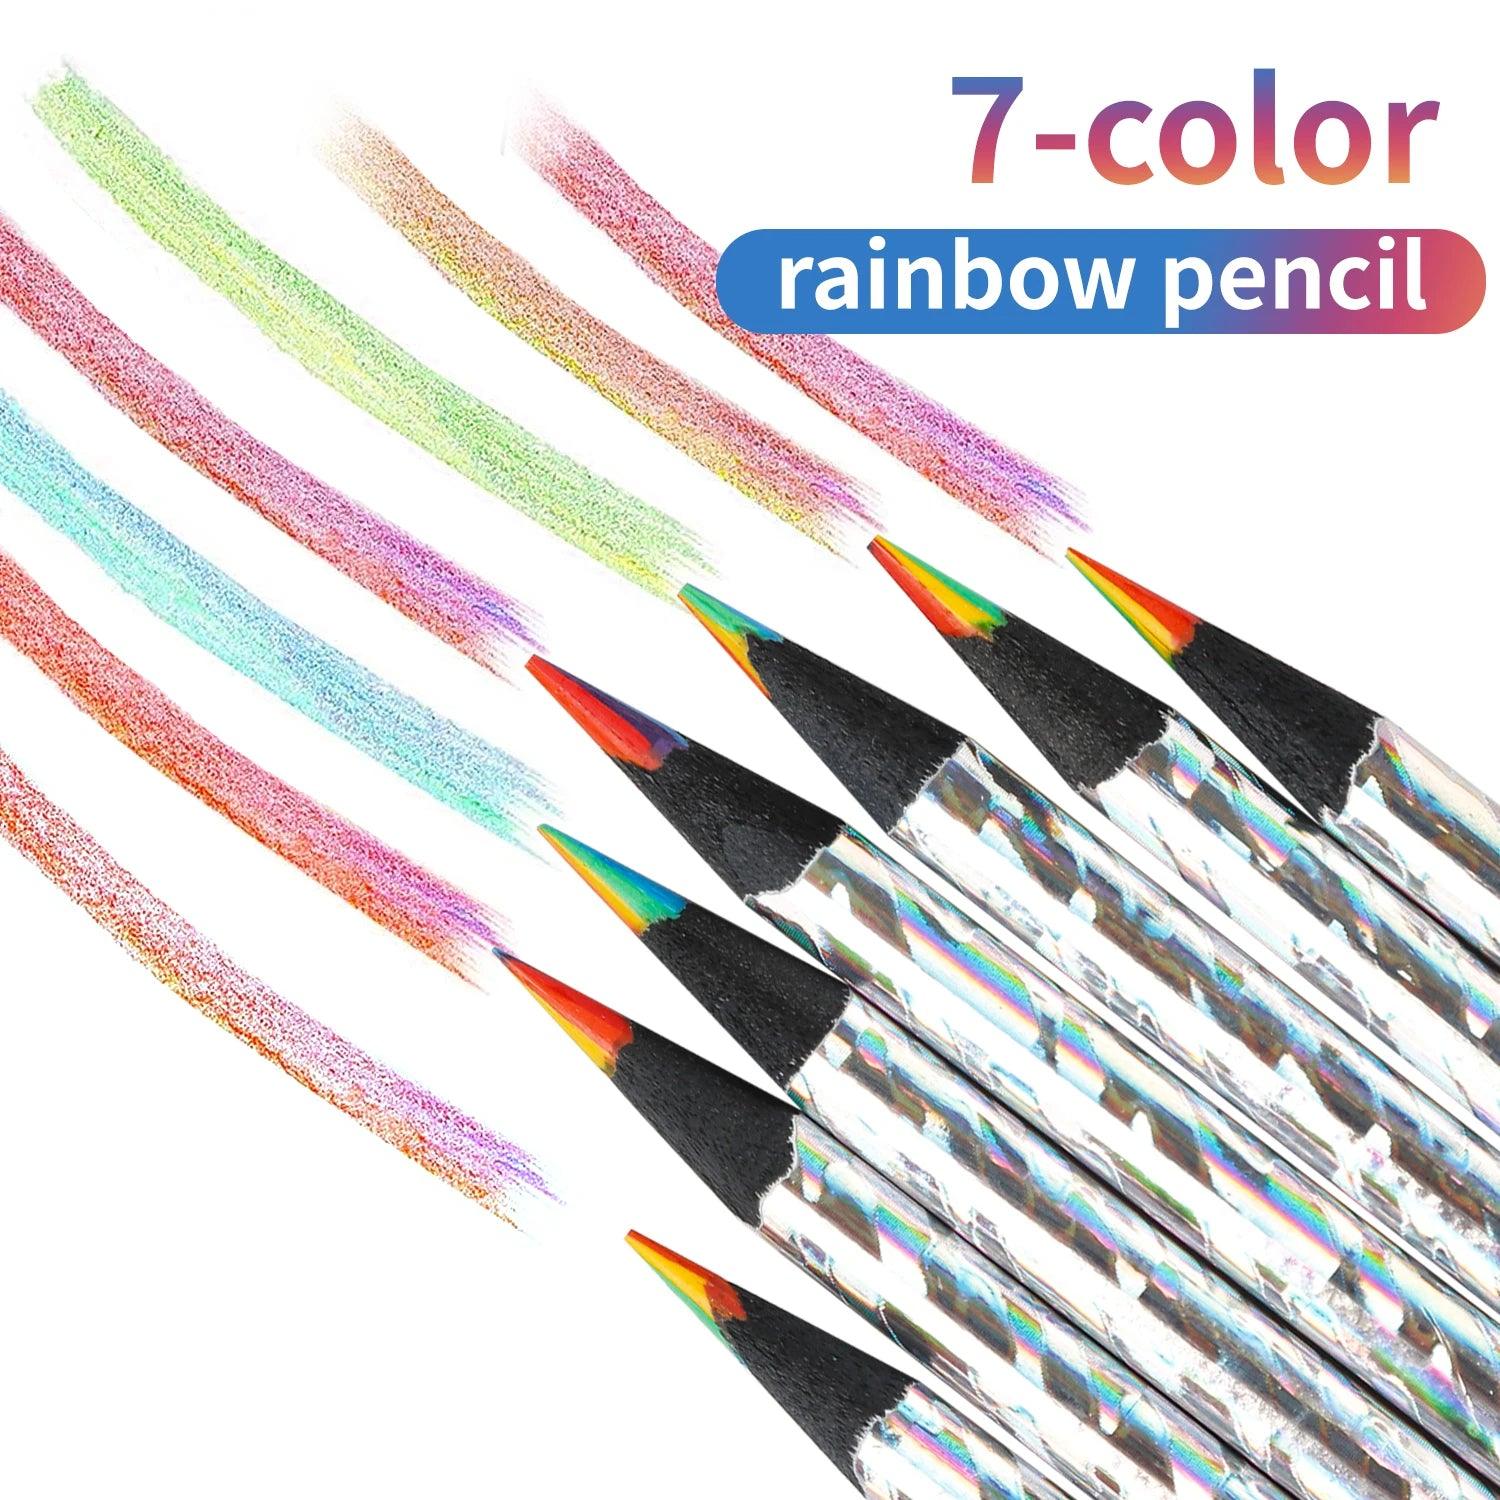 Kawaii Rainbow Pencil Set - Vibrant 7-Color Gradient Crayons for Kids' Art & Stationery  ourlum.com   